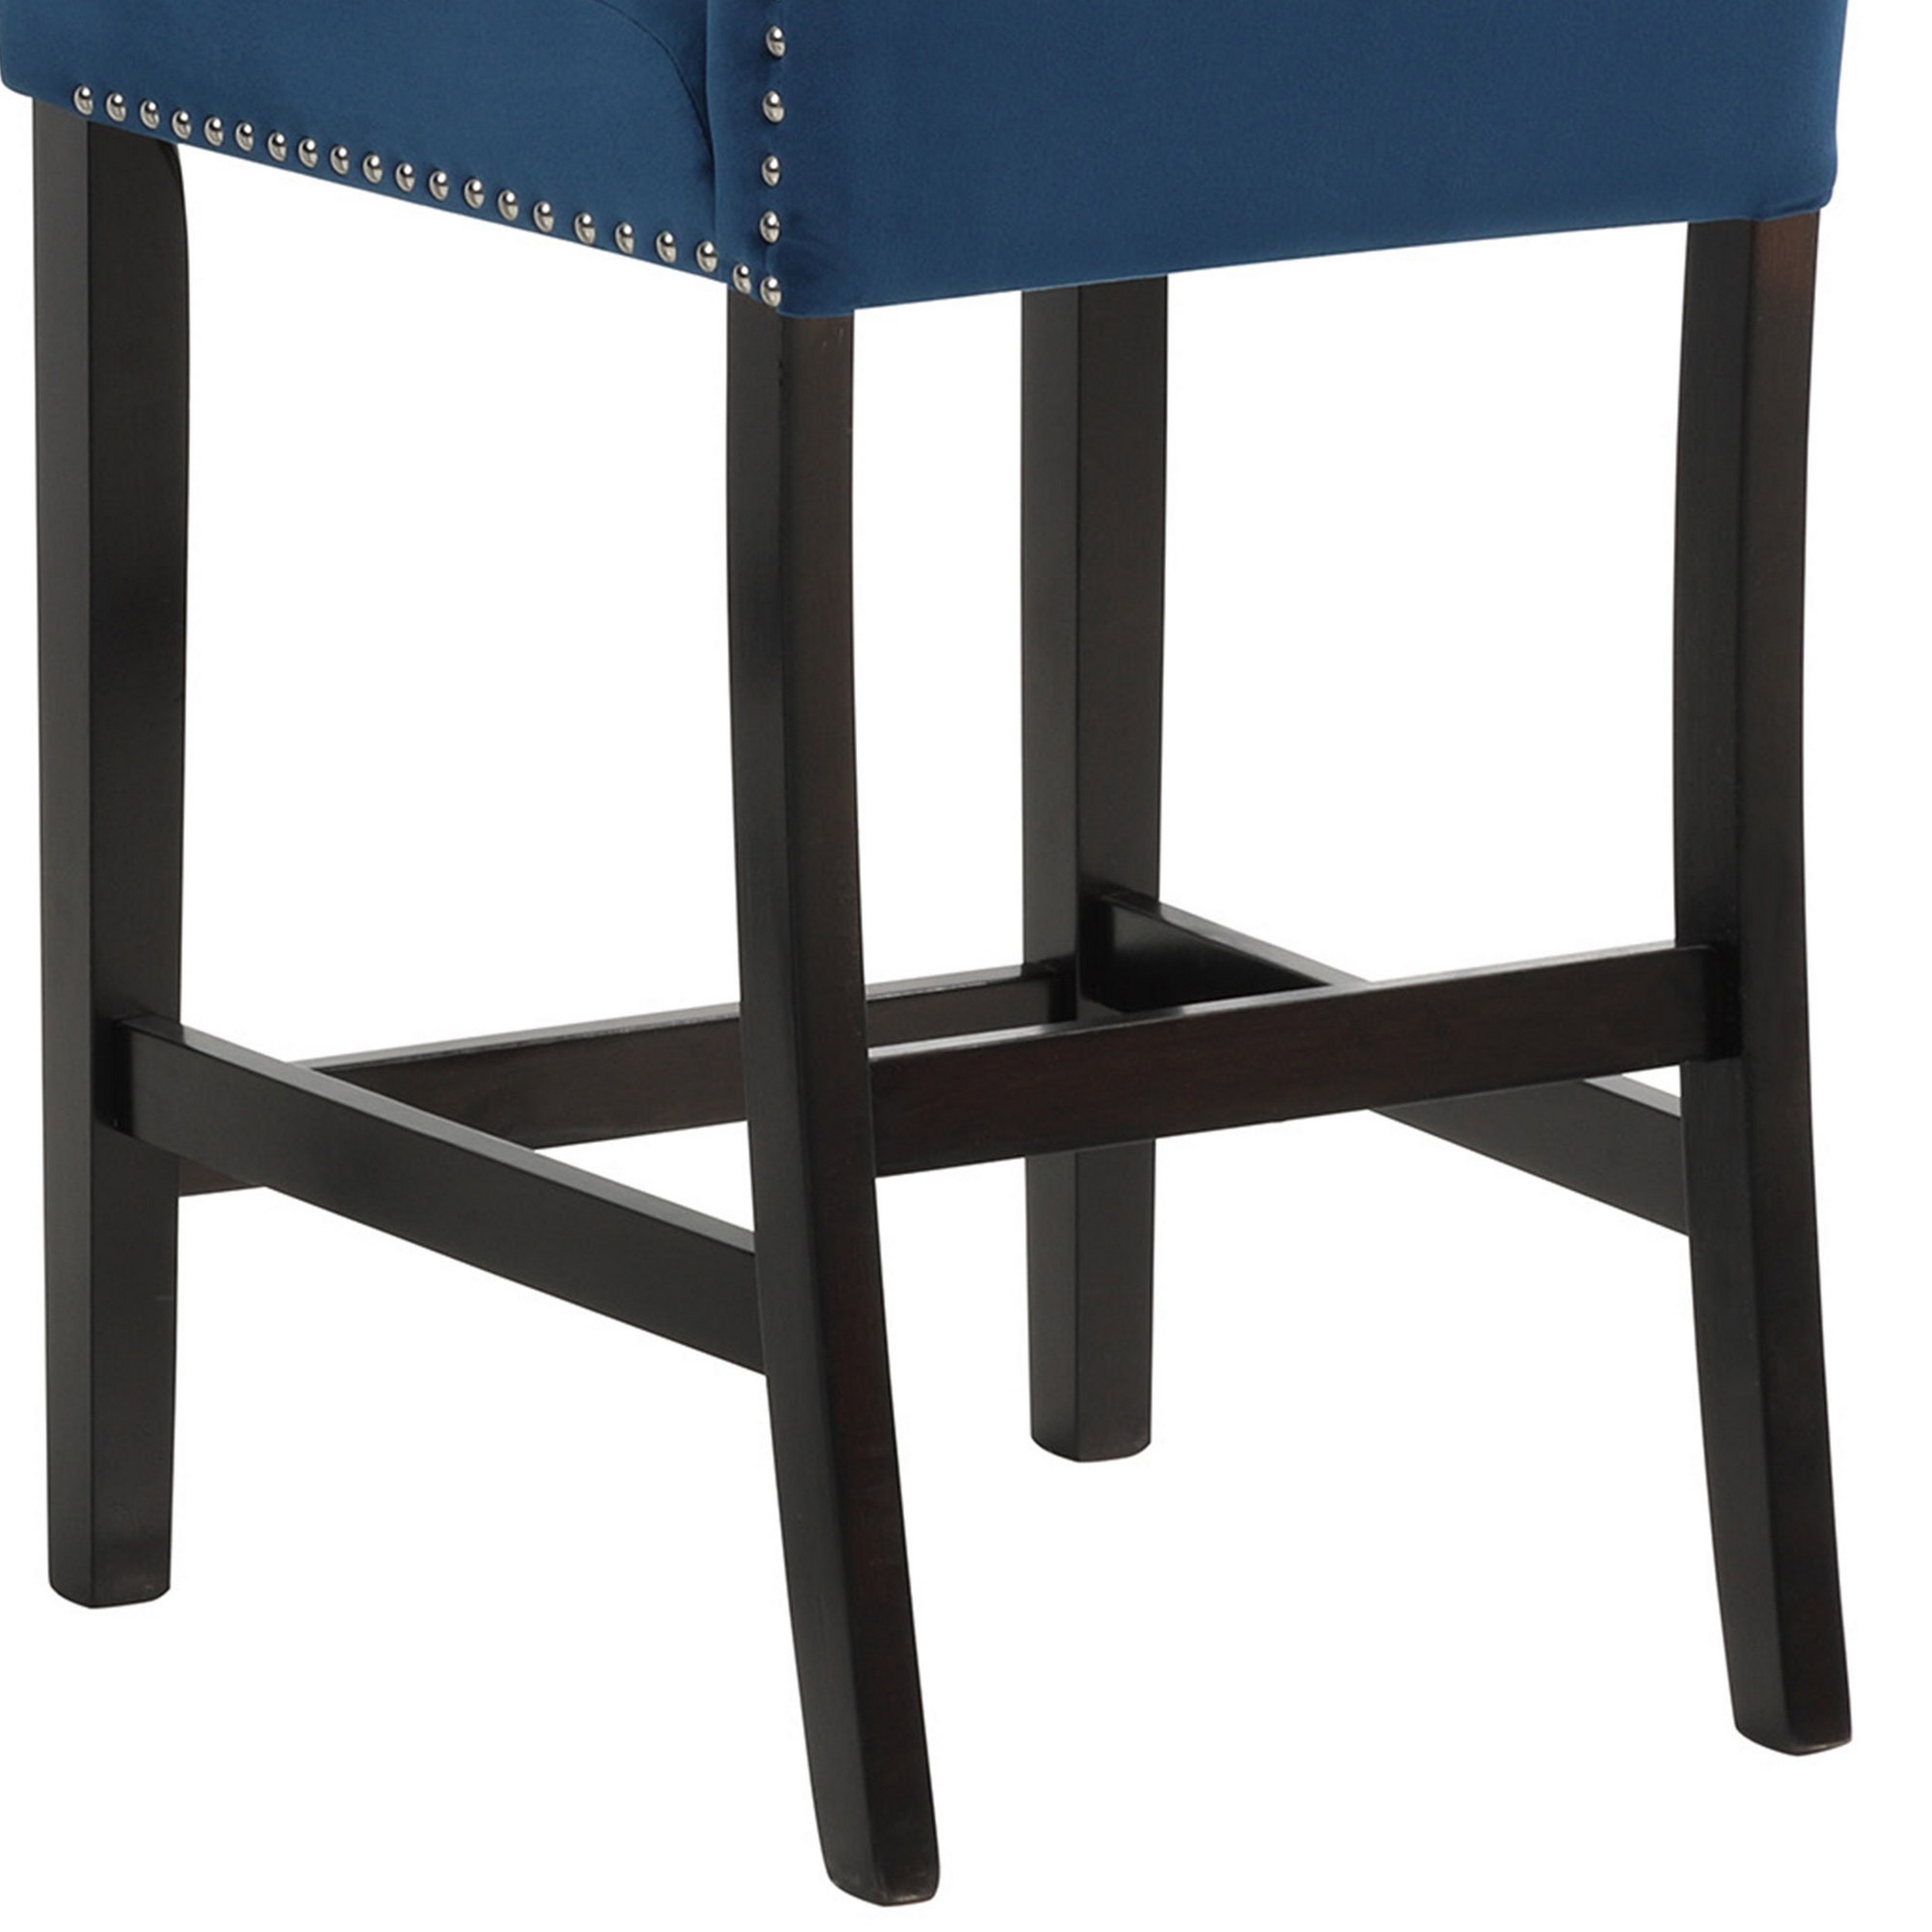 Jordan 24 Inch Counter Height Side Chair Set Of 2, Fabric Upholstery, Blue -Saltoro Sherpi